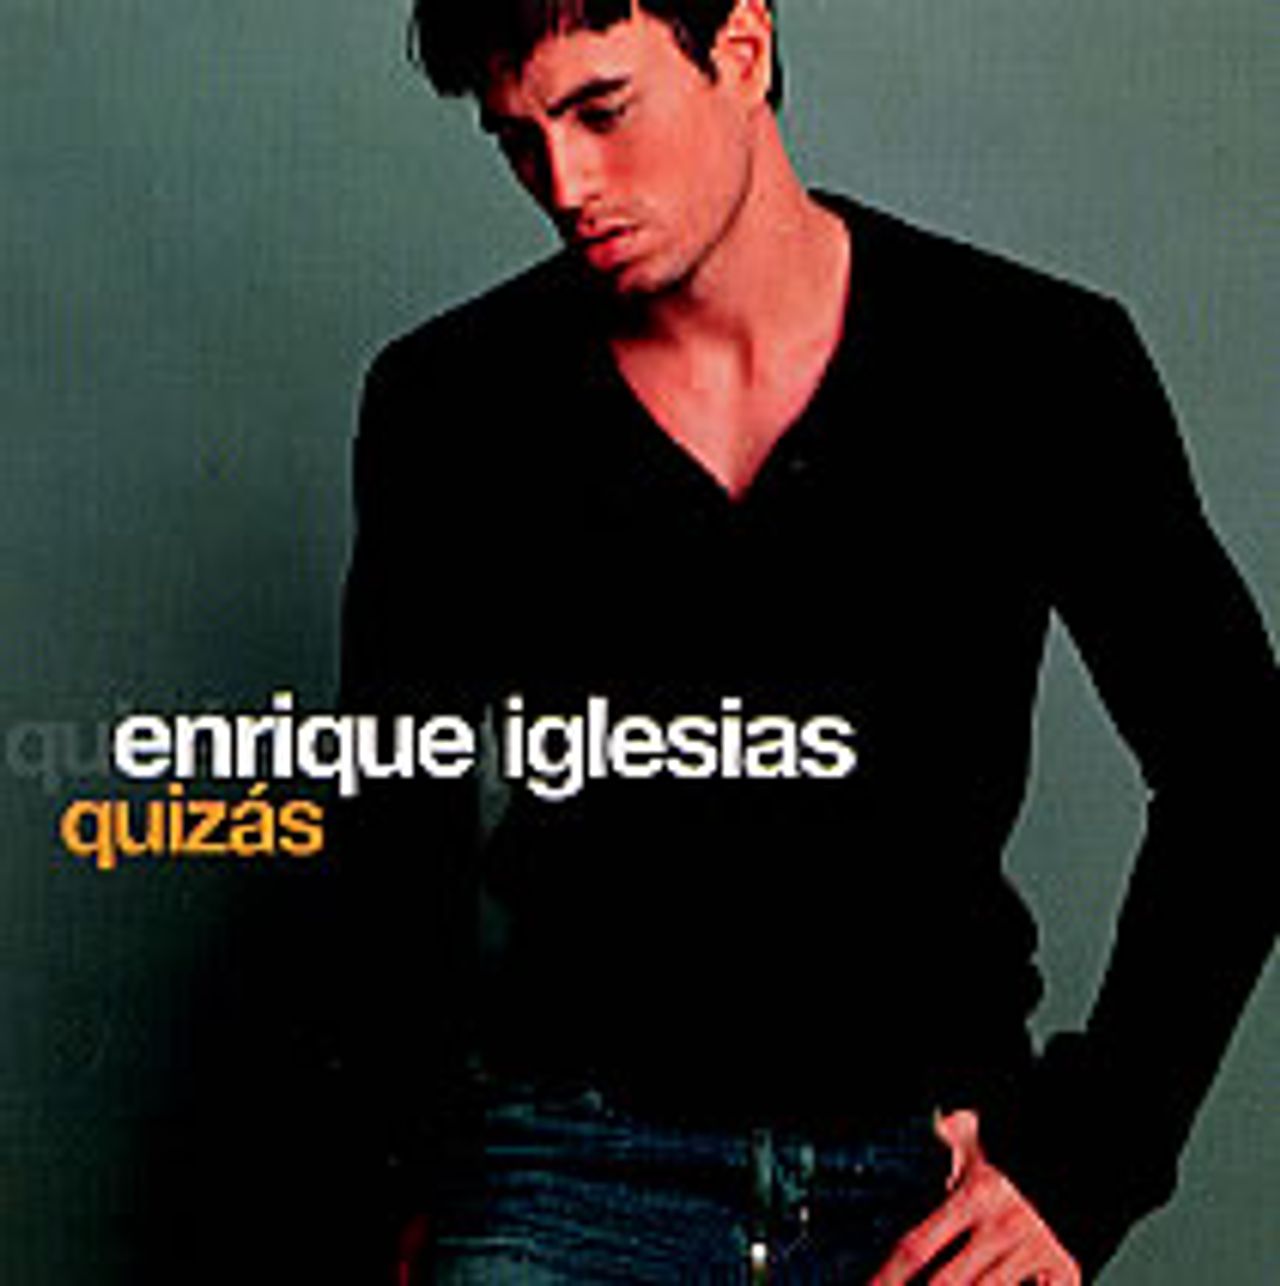 Enrique Iglesias Quizas Mexican Promo CD single — 